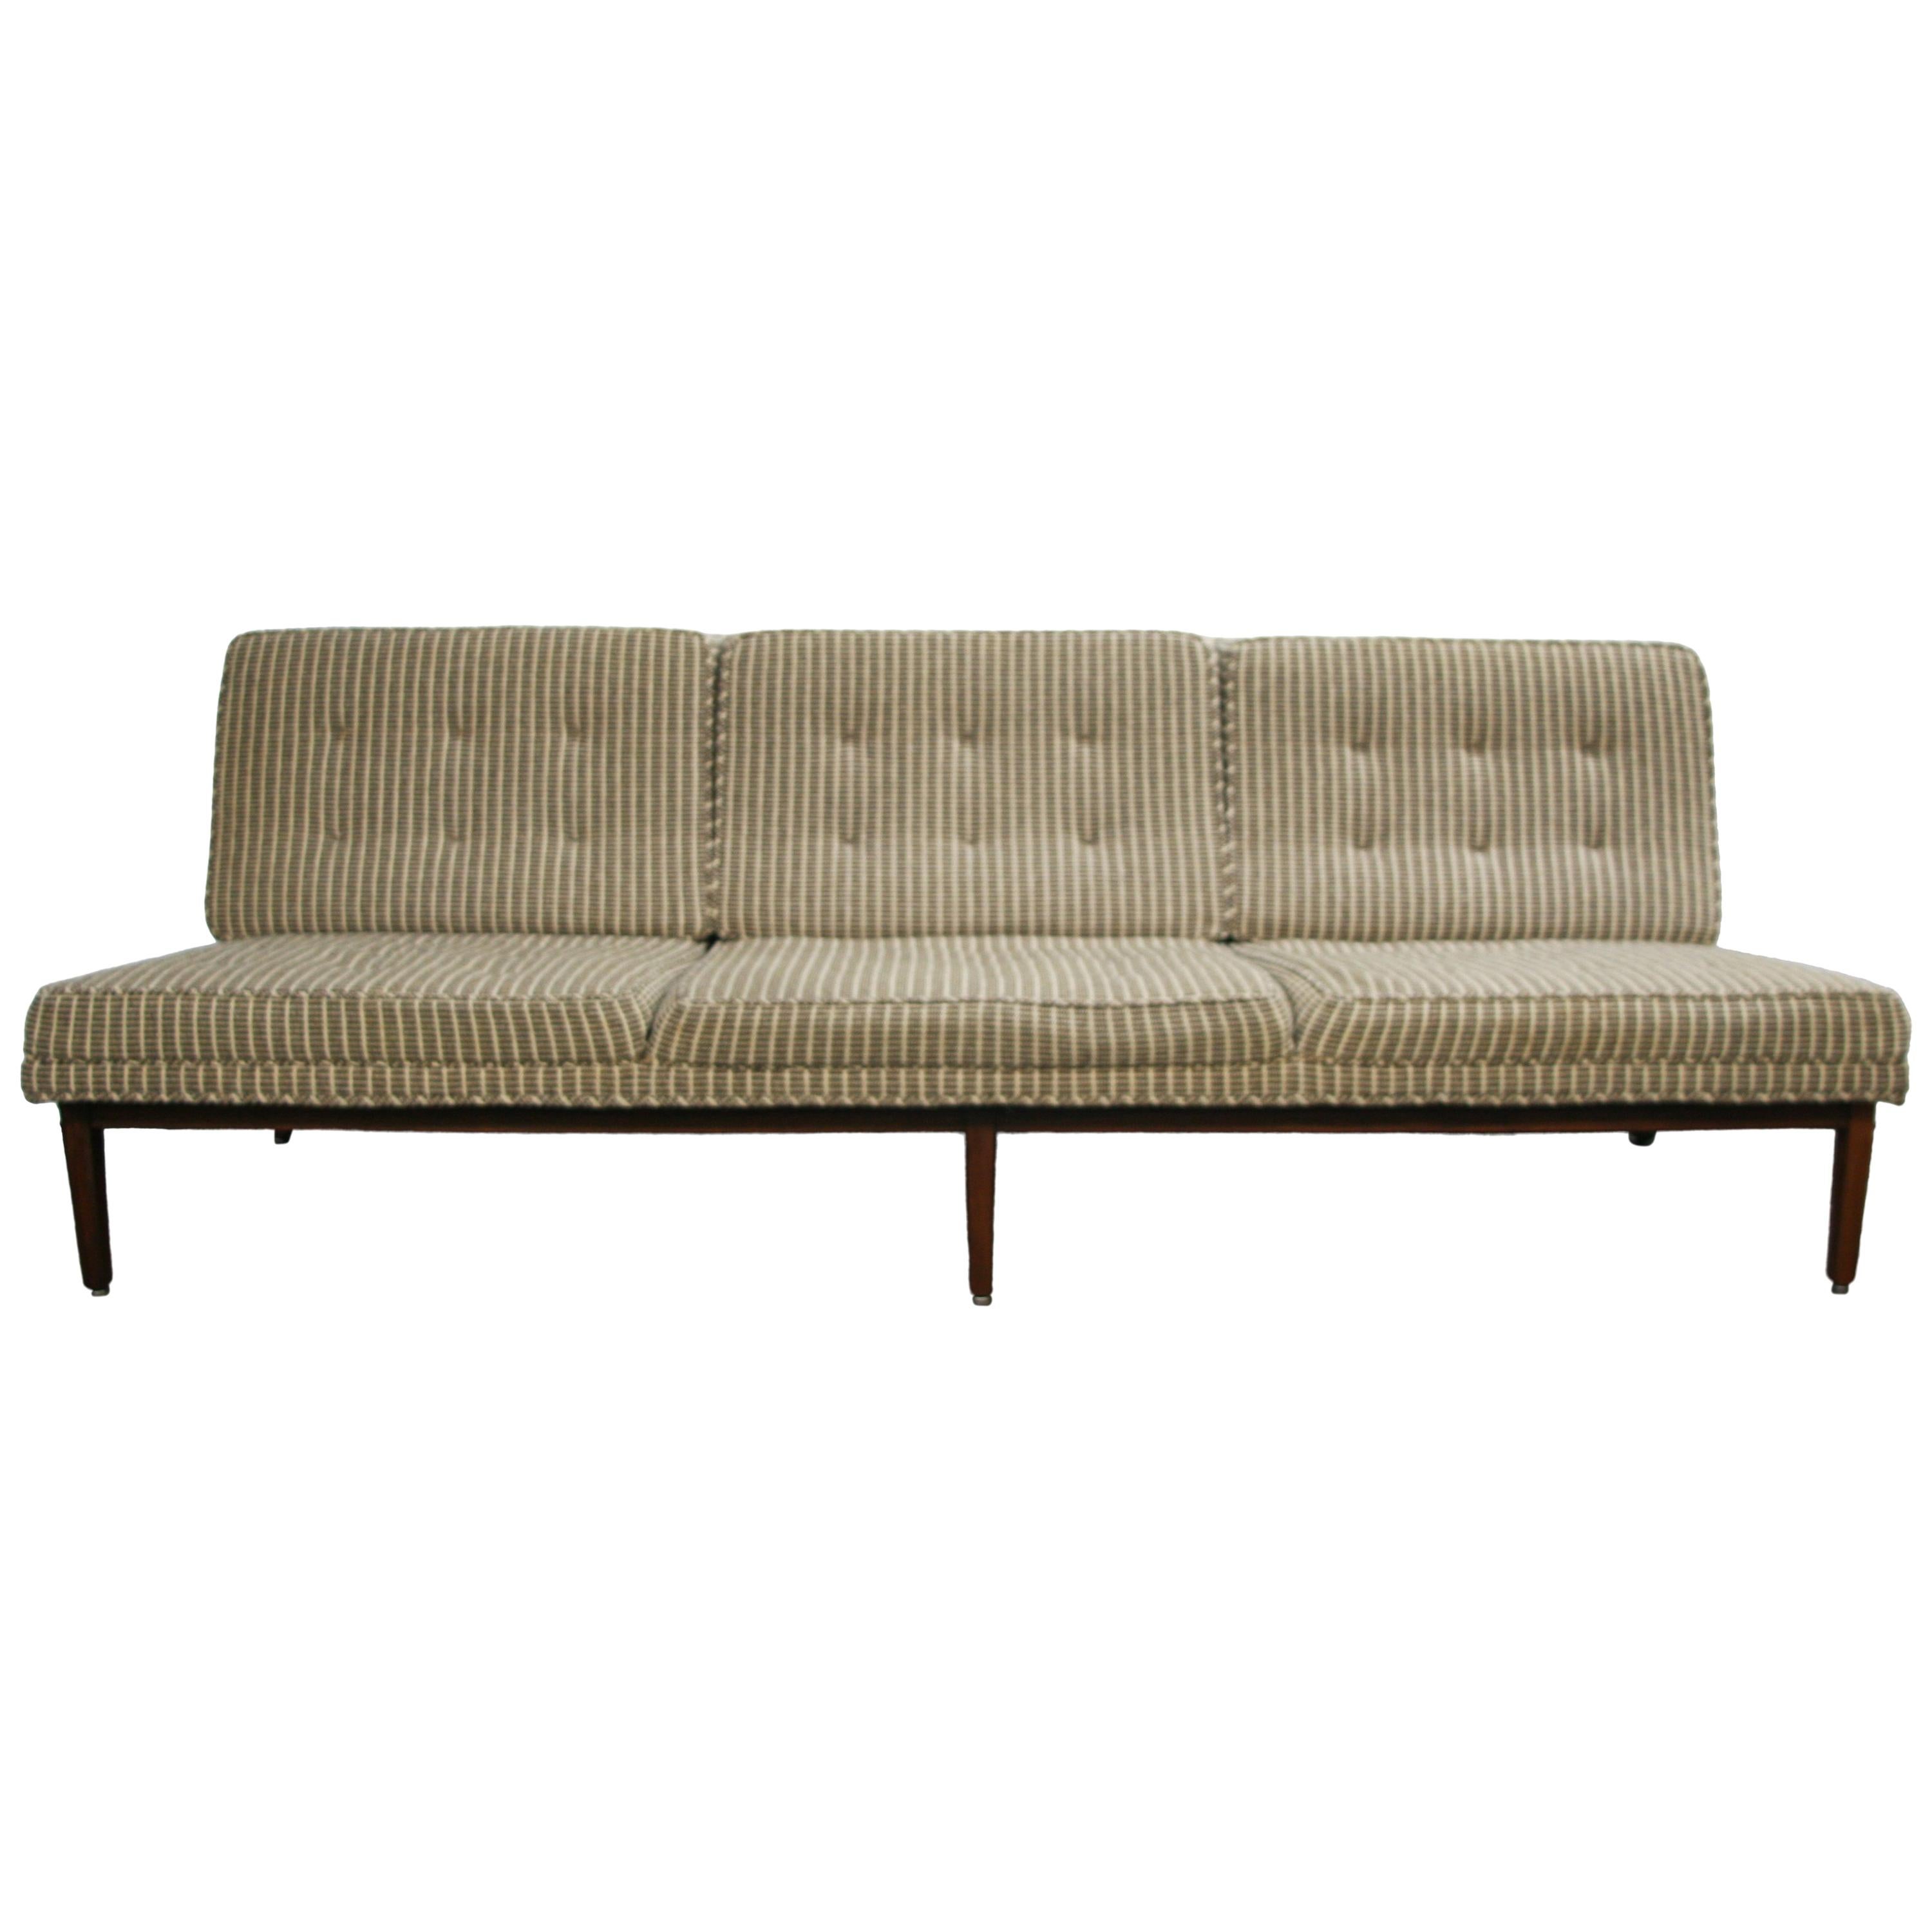 Midcentury Florence Knoll Sofa #53 T Three-Seat Solid Teak Base Wool Upholstery